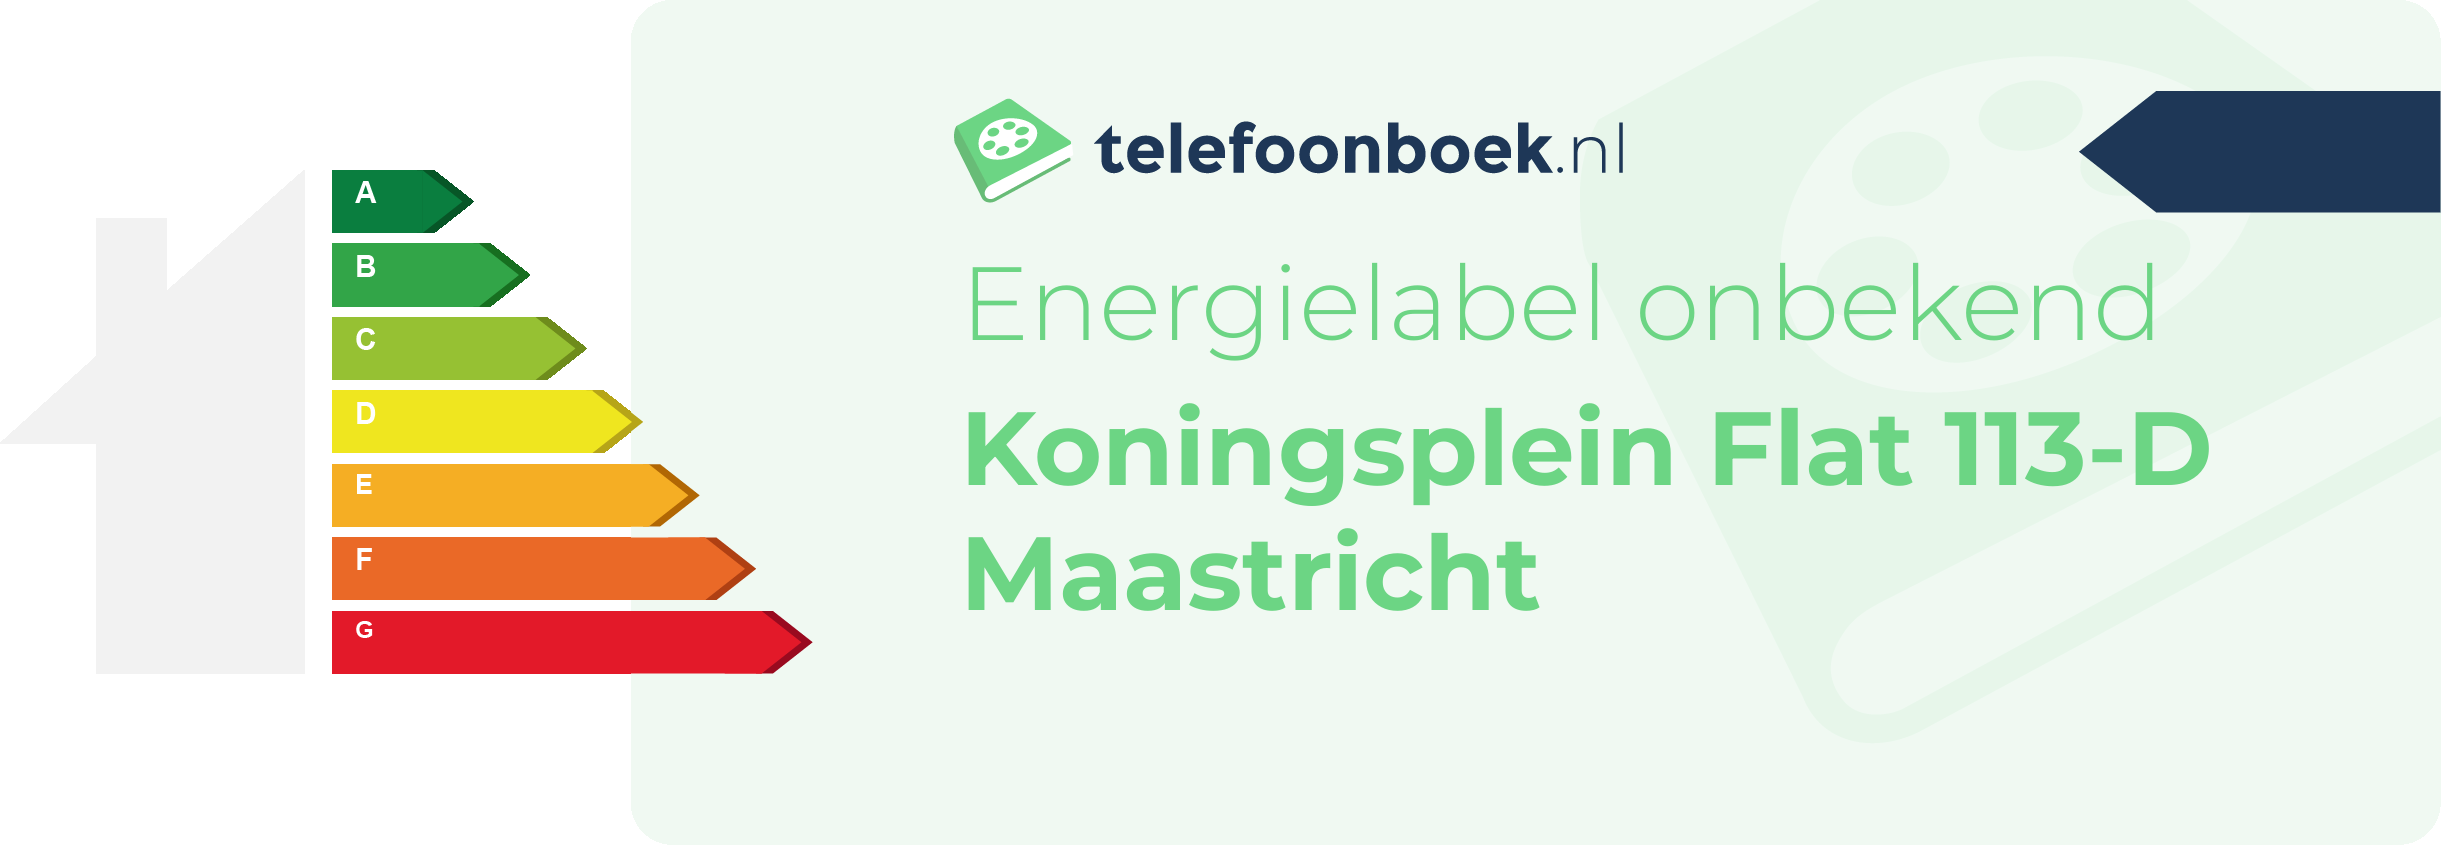 Energielabel Koningsplein Flat 113-D Maastricht